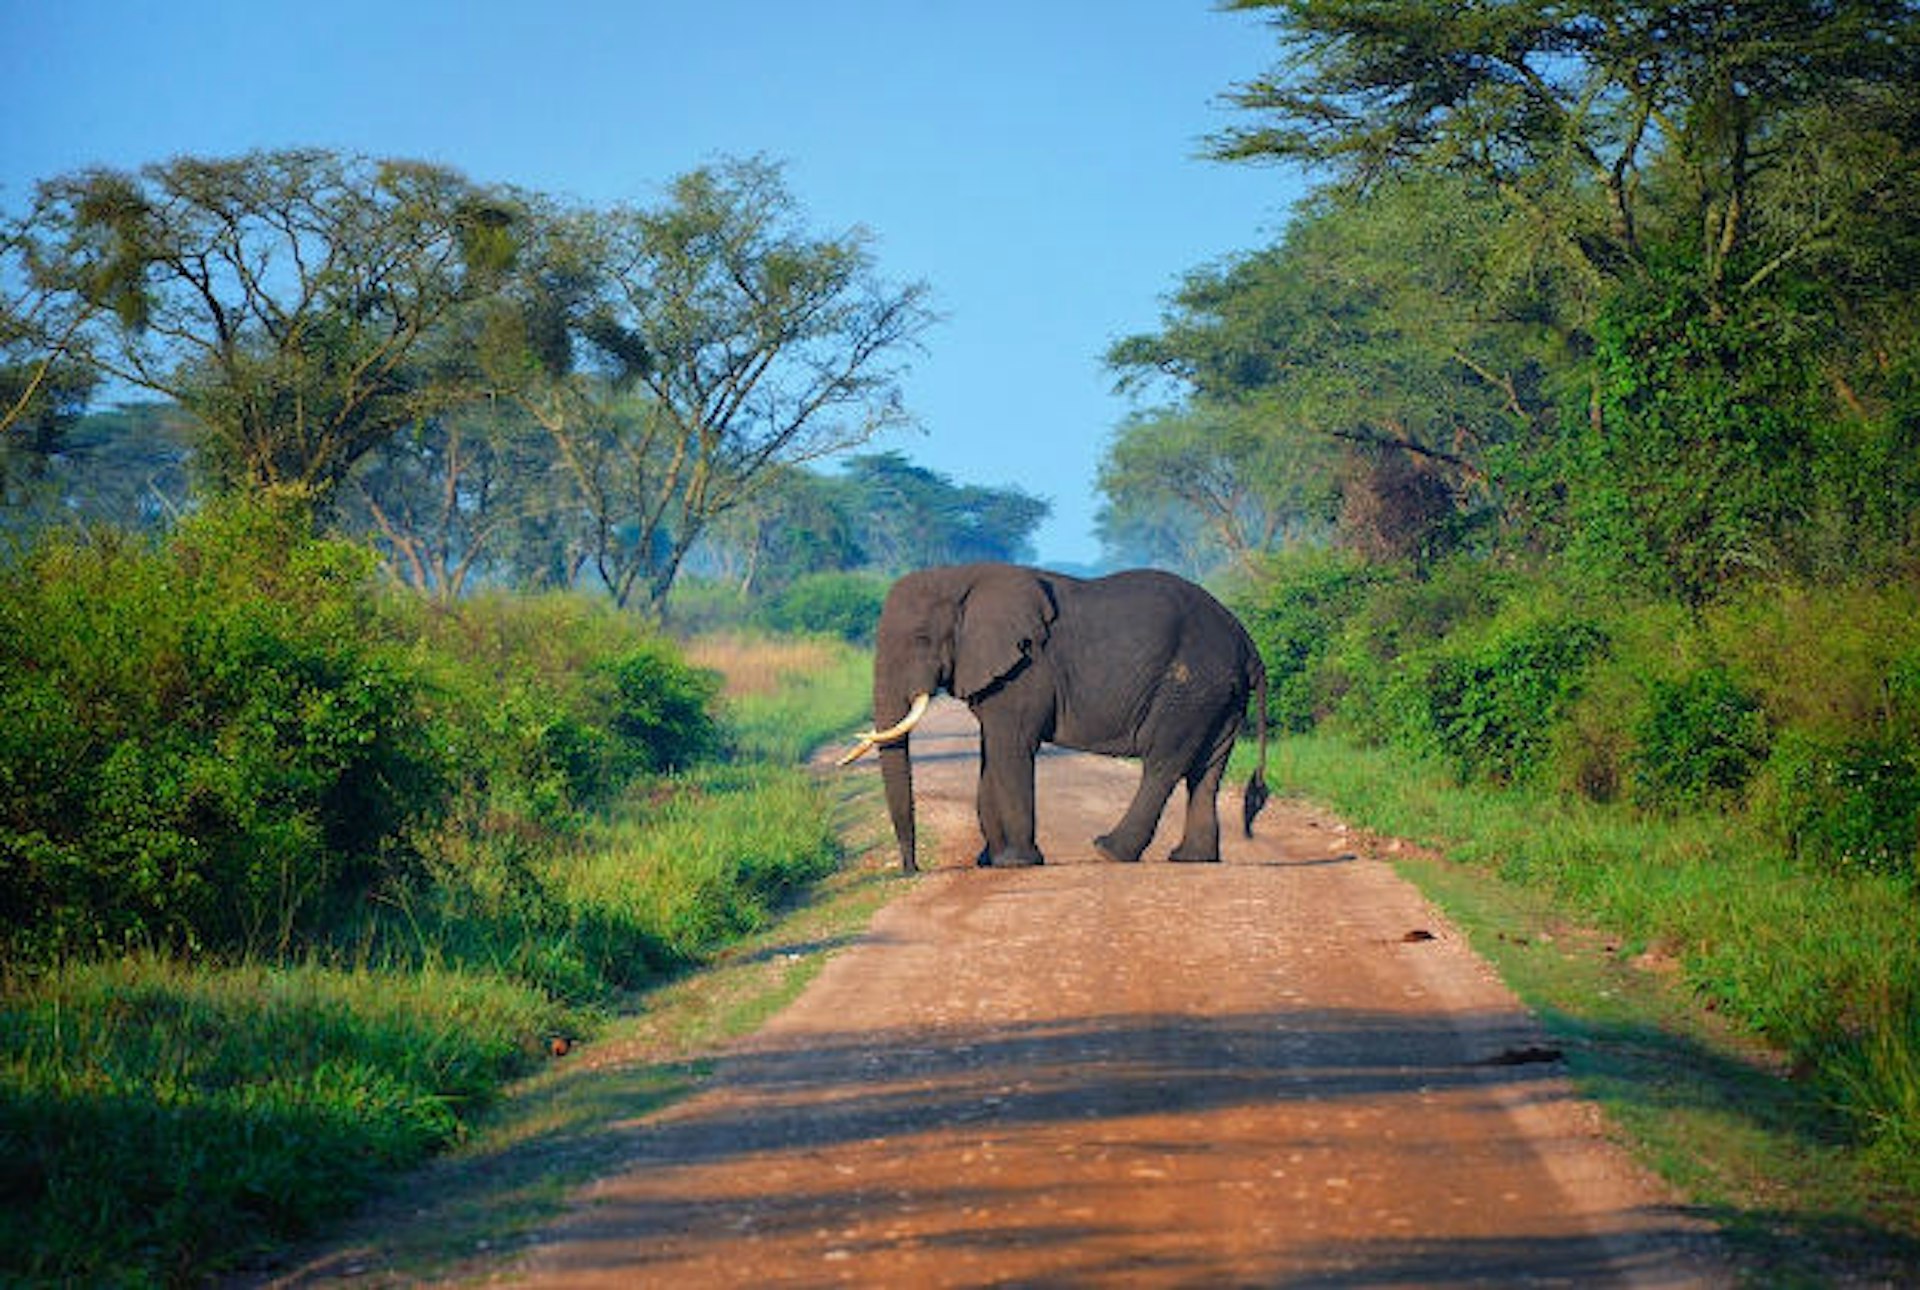 Elephant crossing, Uganda.